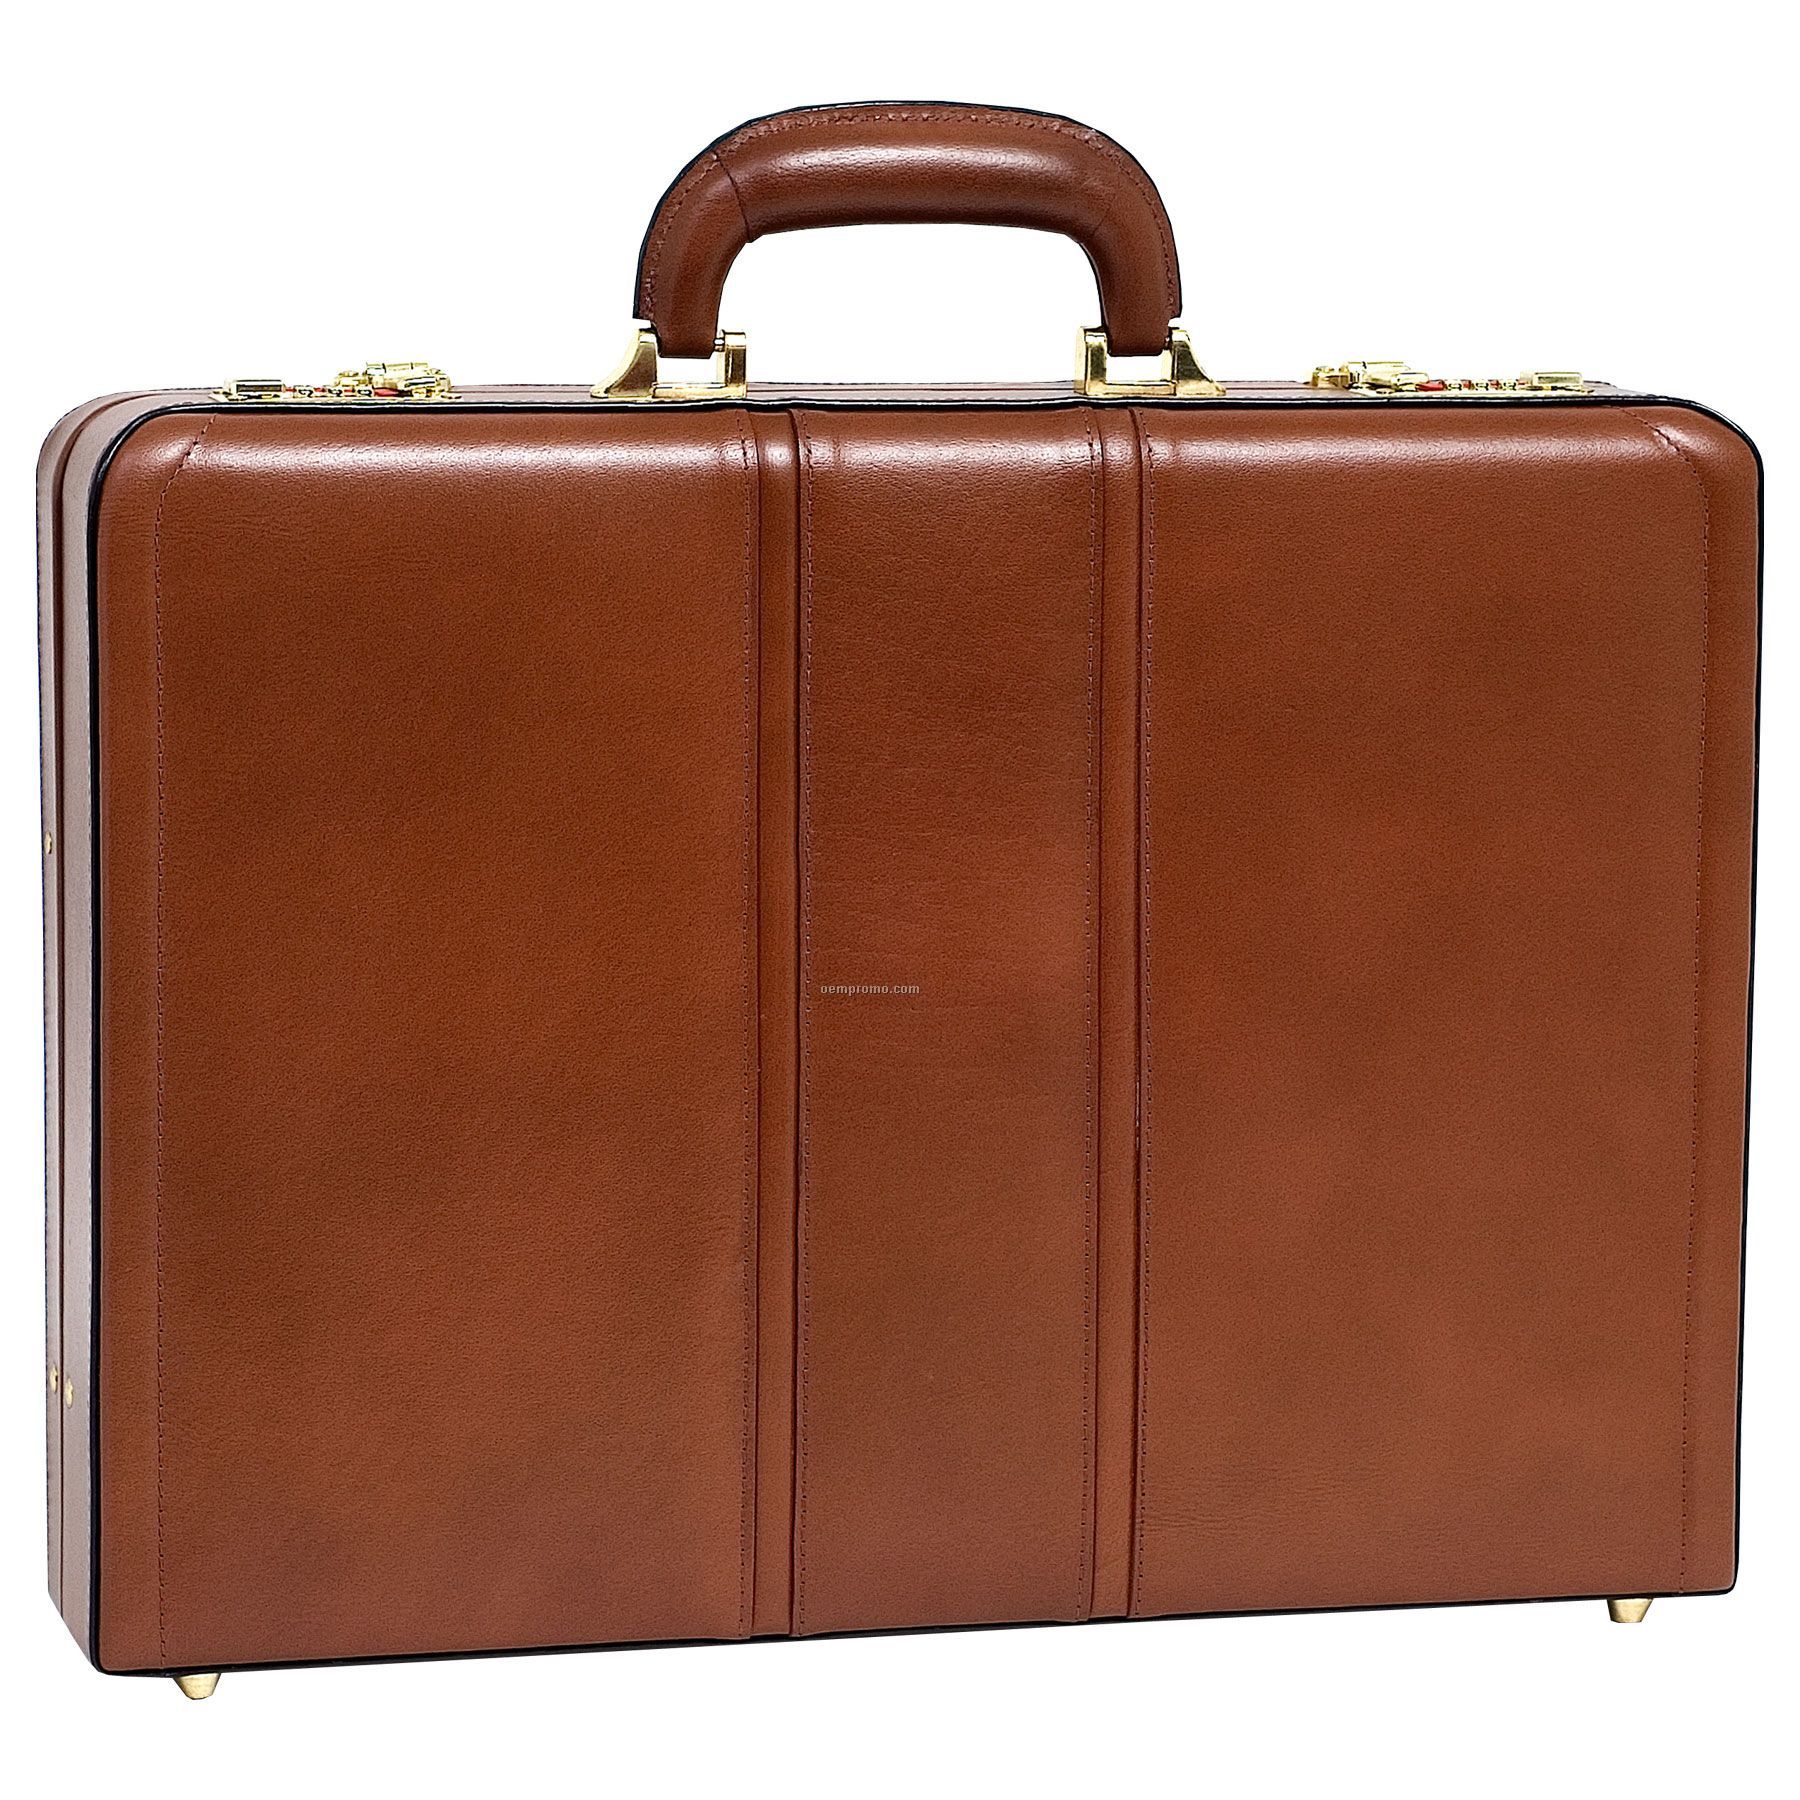 Daley Leather Attache Case - Brown